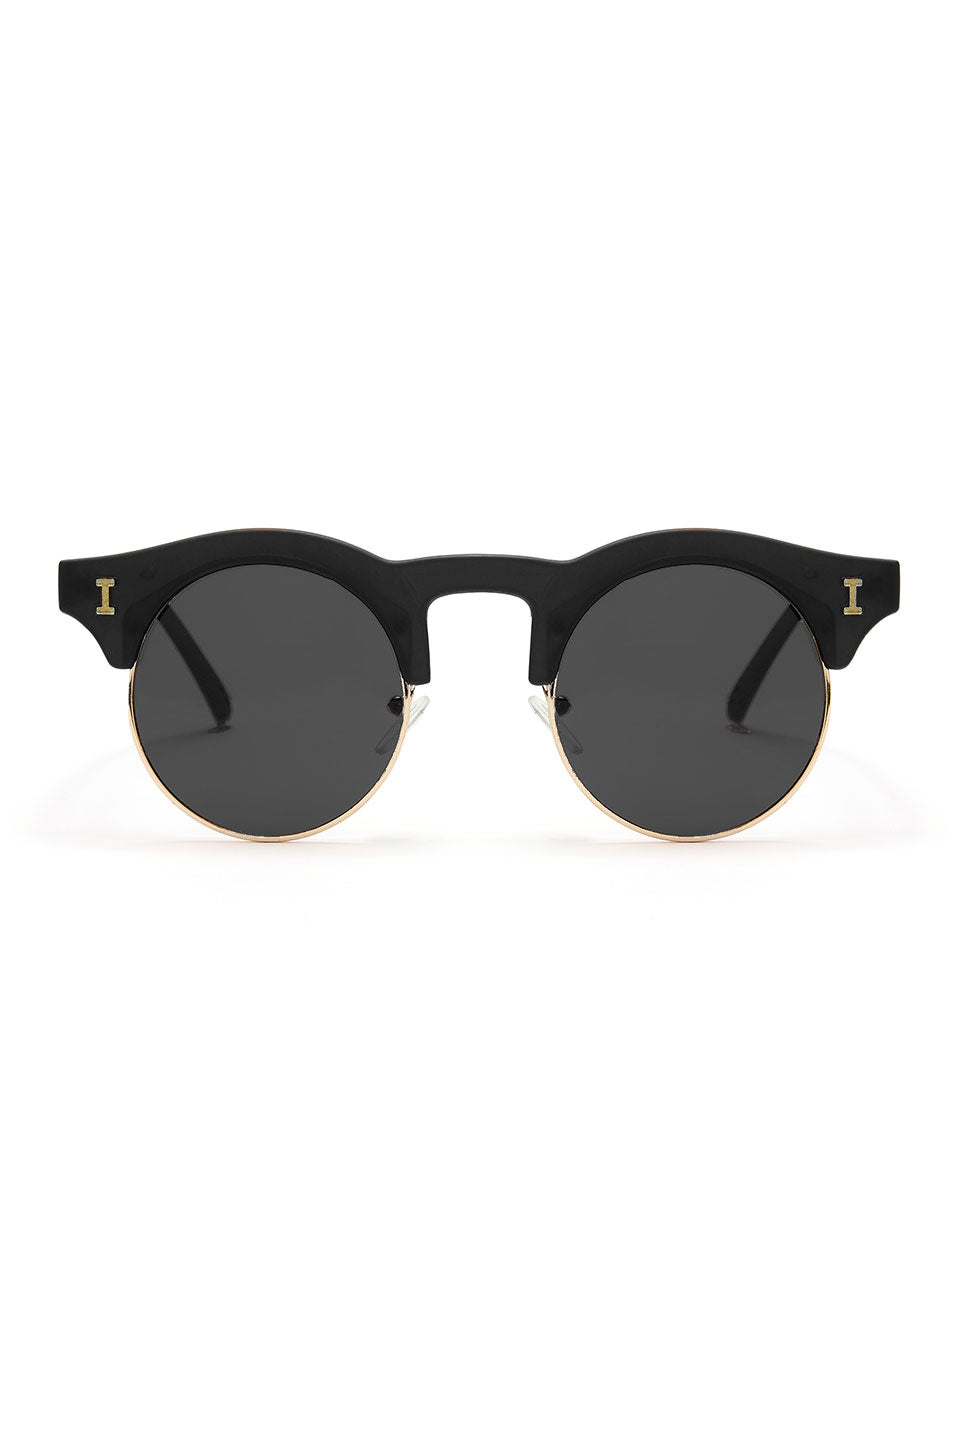 Marlene 30s Sunglasses in Black